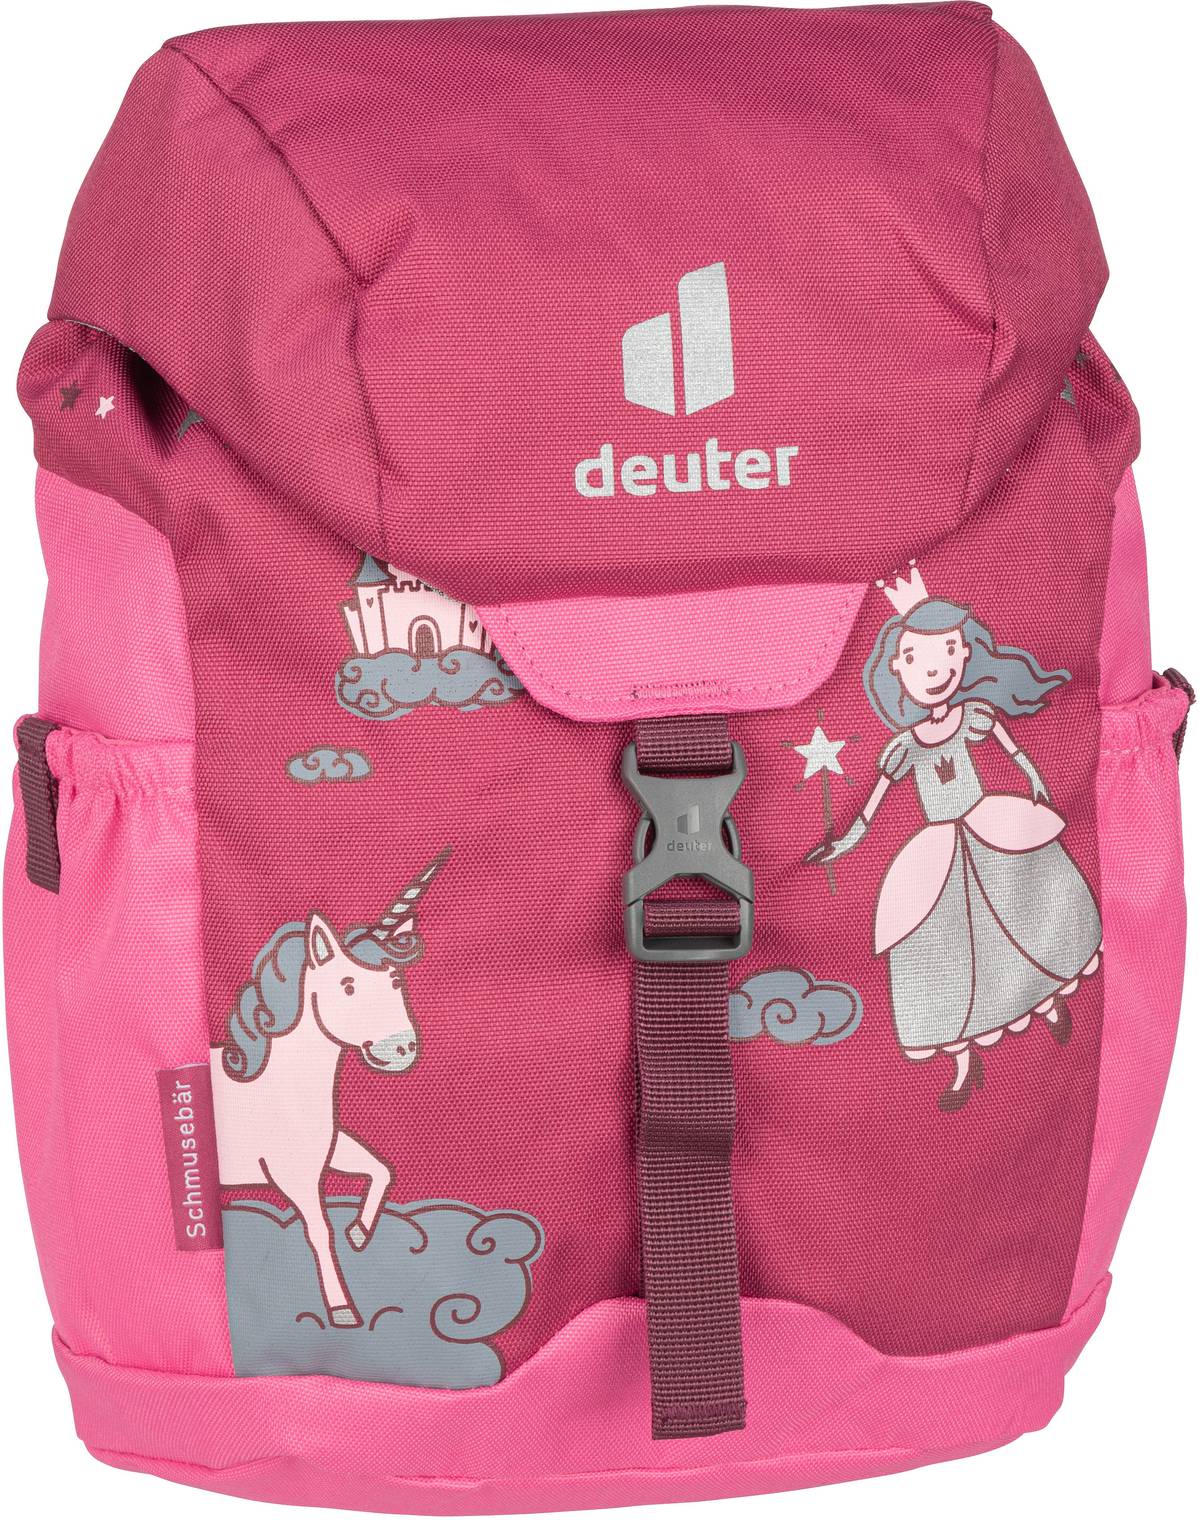 Deuter Schmusebär  in Pink (8 Liter), Rucksack / Backpack